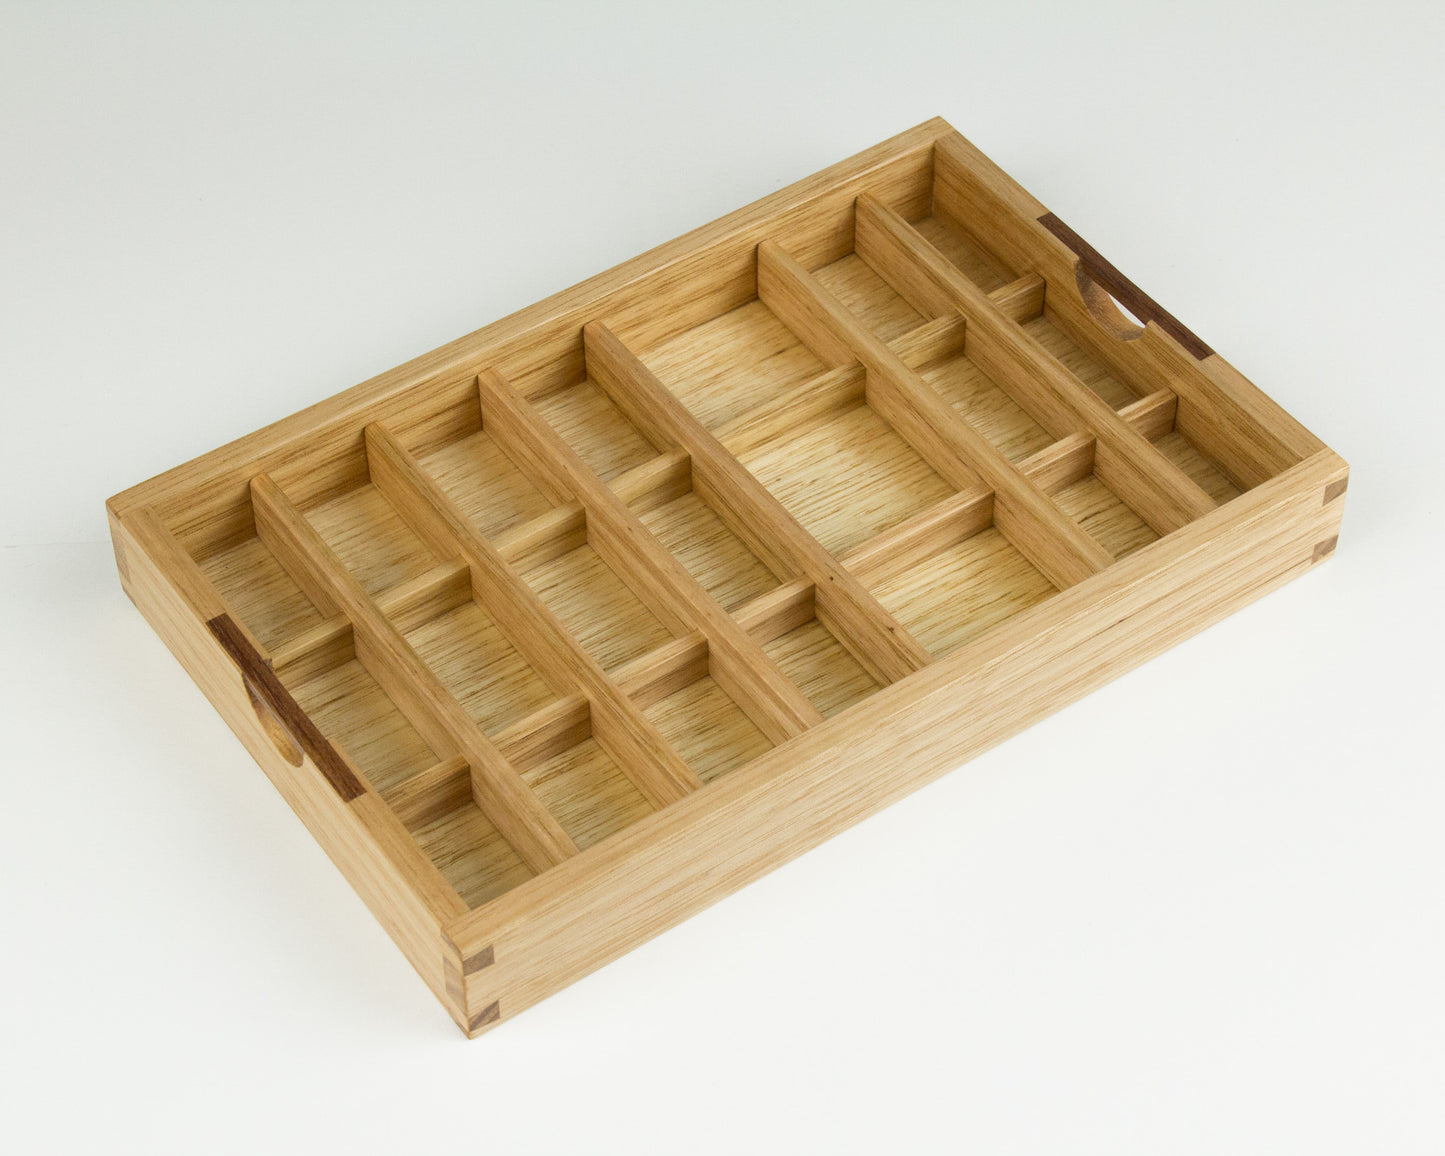 Wooden jewellery box tray handcrafted from Tasmanian Oak